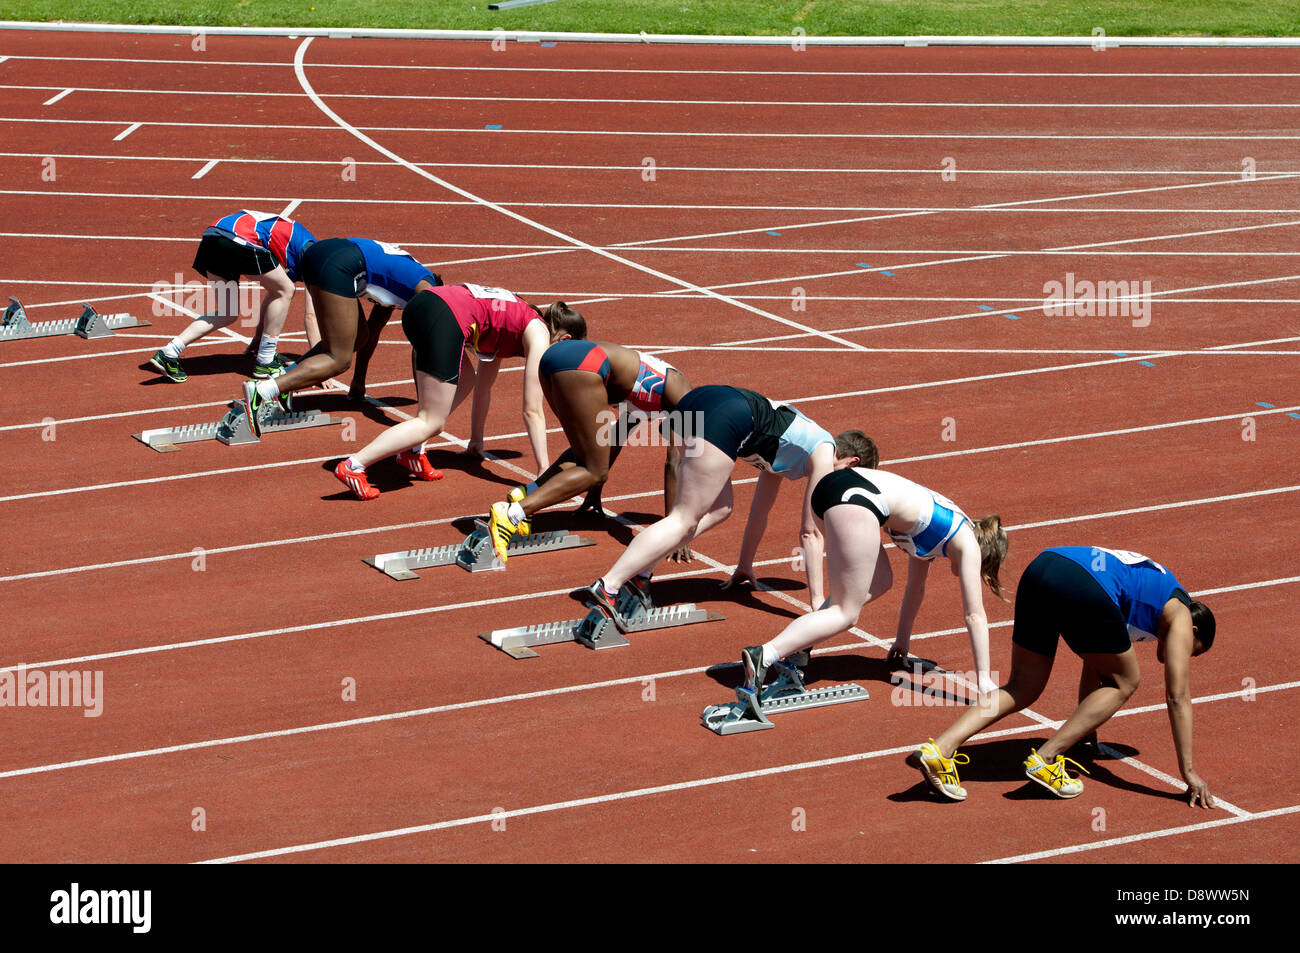 Leichtathletik, Teenager-100-Meter-Lauf Stockfotografie - Alamy